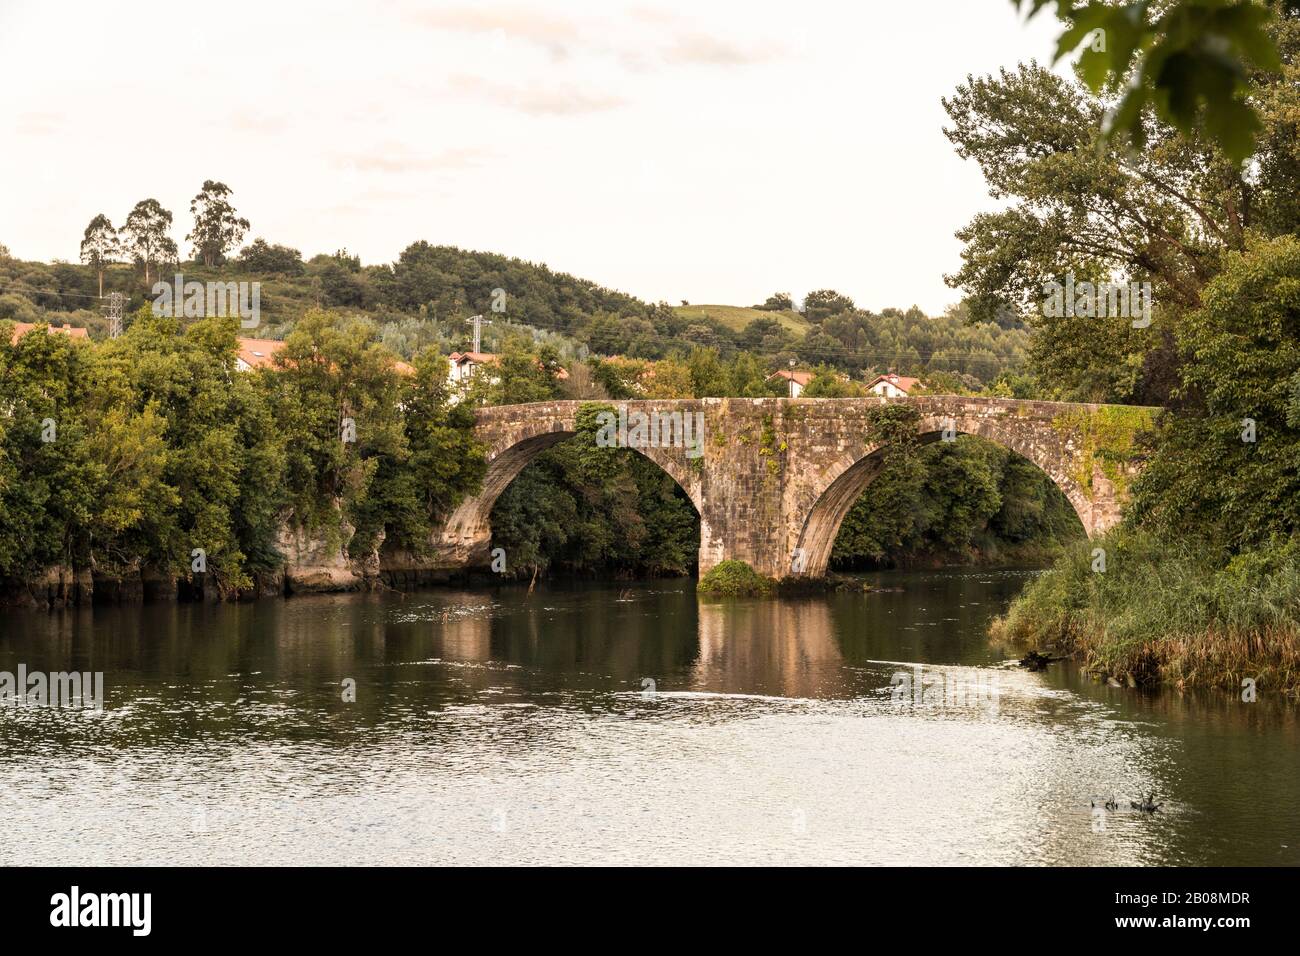 Oruna de Pielagos, Spain. The Puente Viejo (Old Bridge) over the river Pas in Cantabria Stock Photo